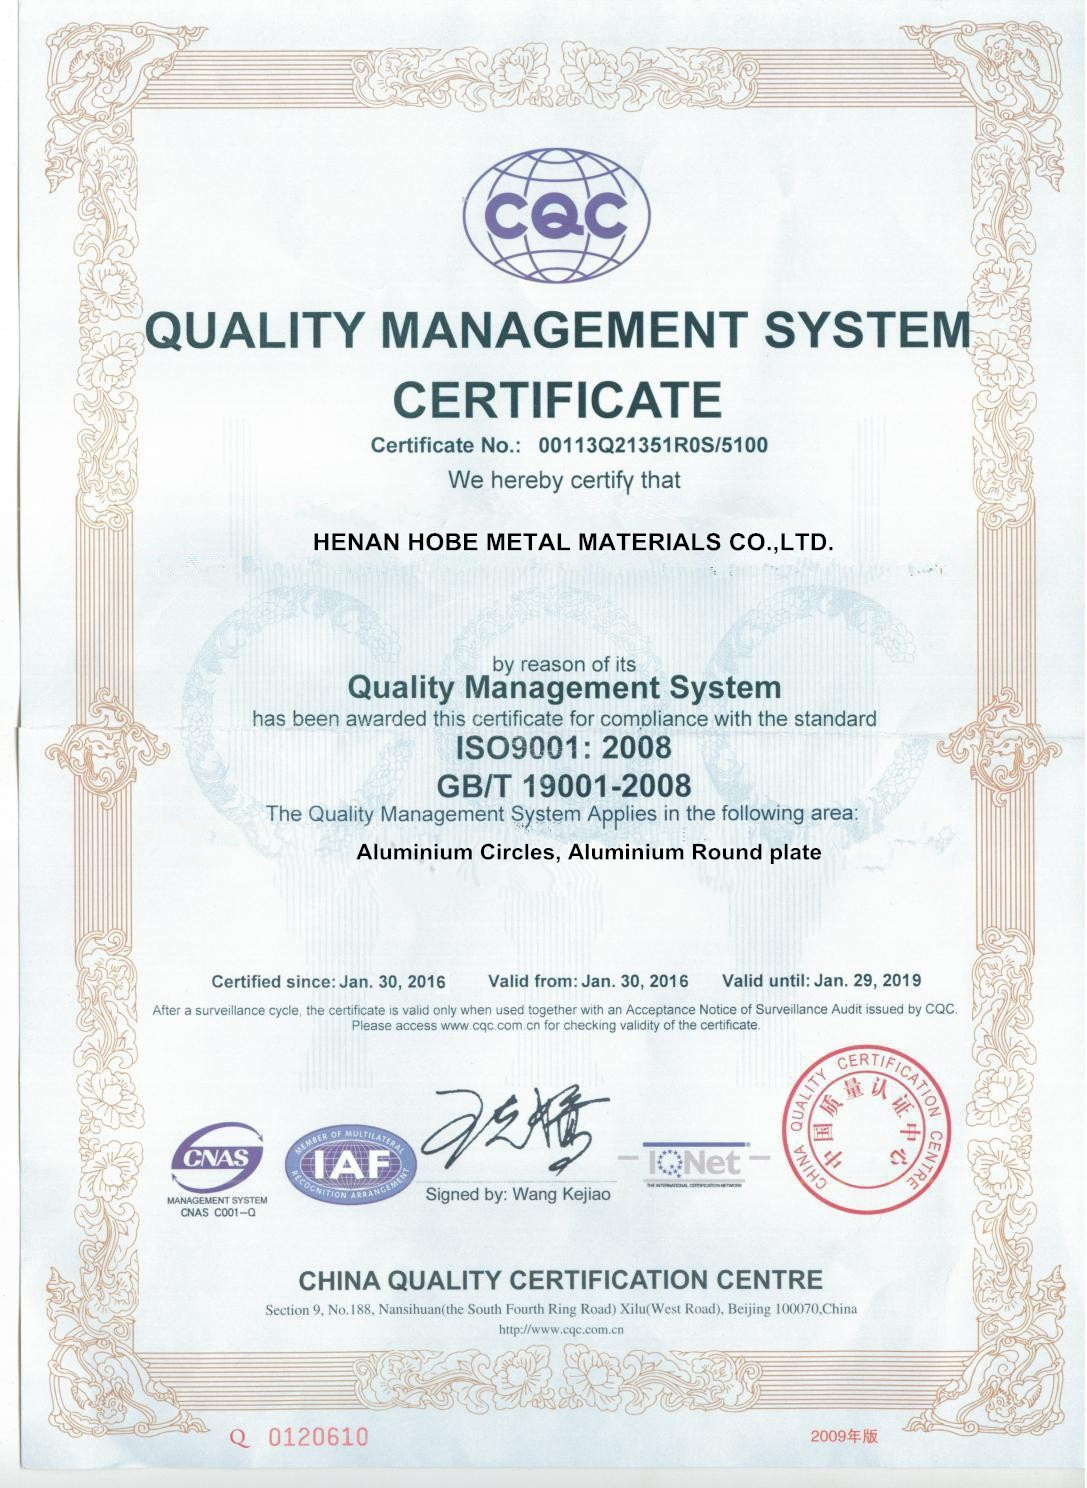 HENAN HOBE METAL MATERIALS CO.,LTD. Certifications